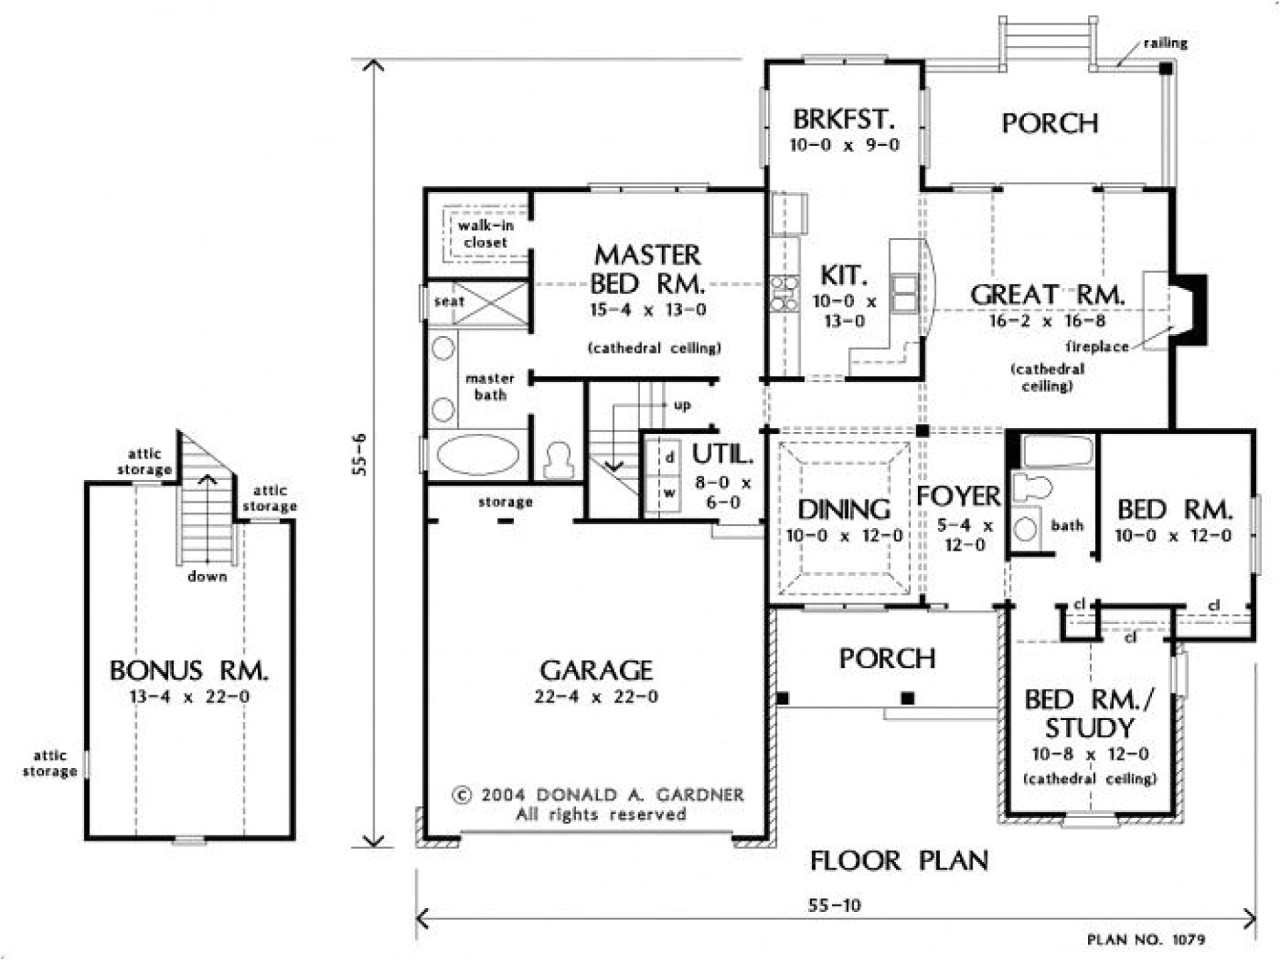 Home Plan Drawing Free Drawing Floor Plans Online Floor Plan Drawing